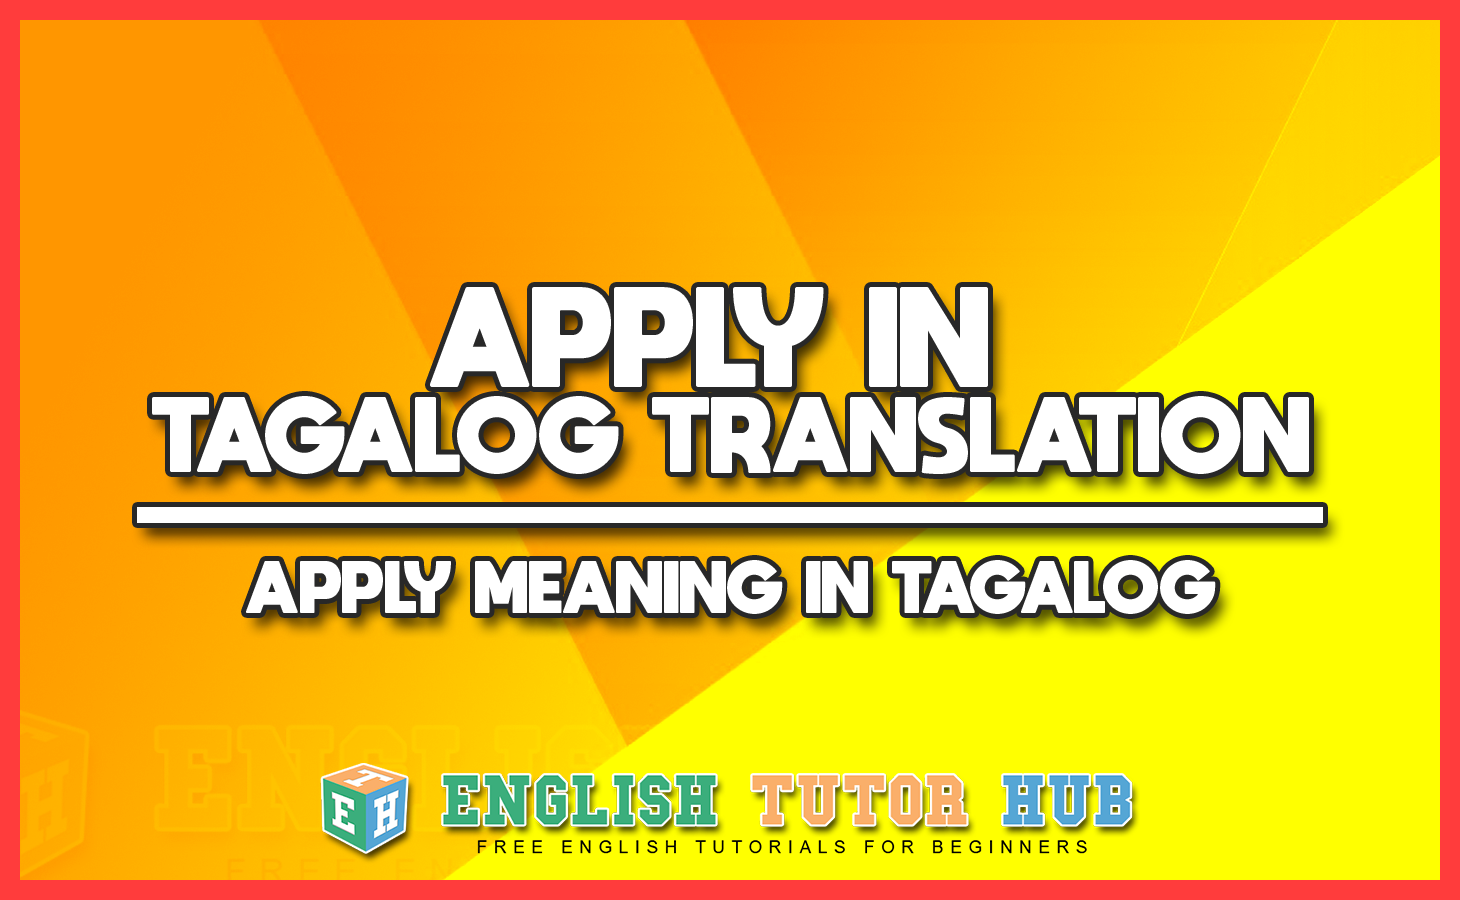 APPLY IN TAGALOG TRANSLATION